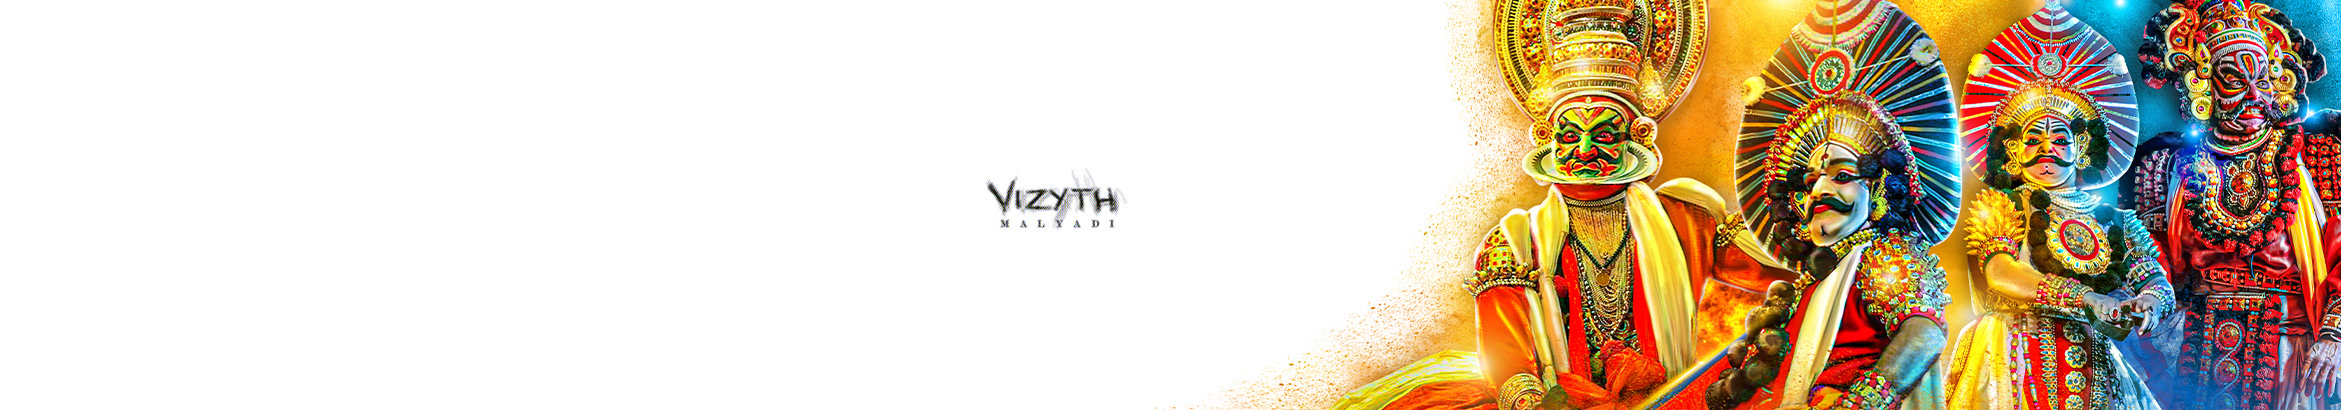 Bannière de profil de Vizyth Malyadi